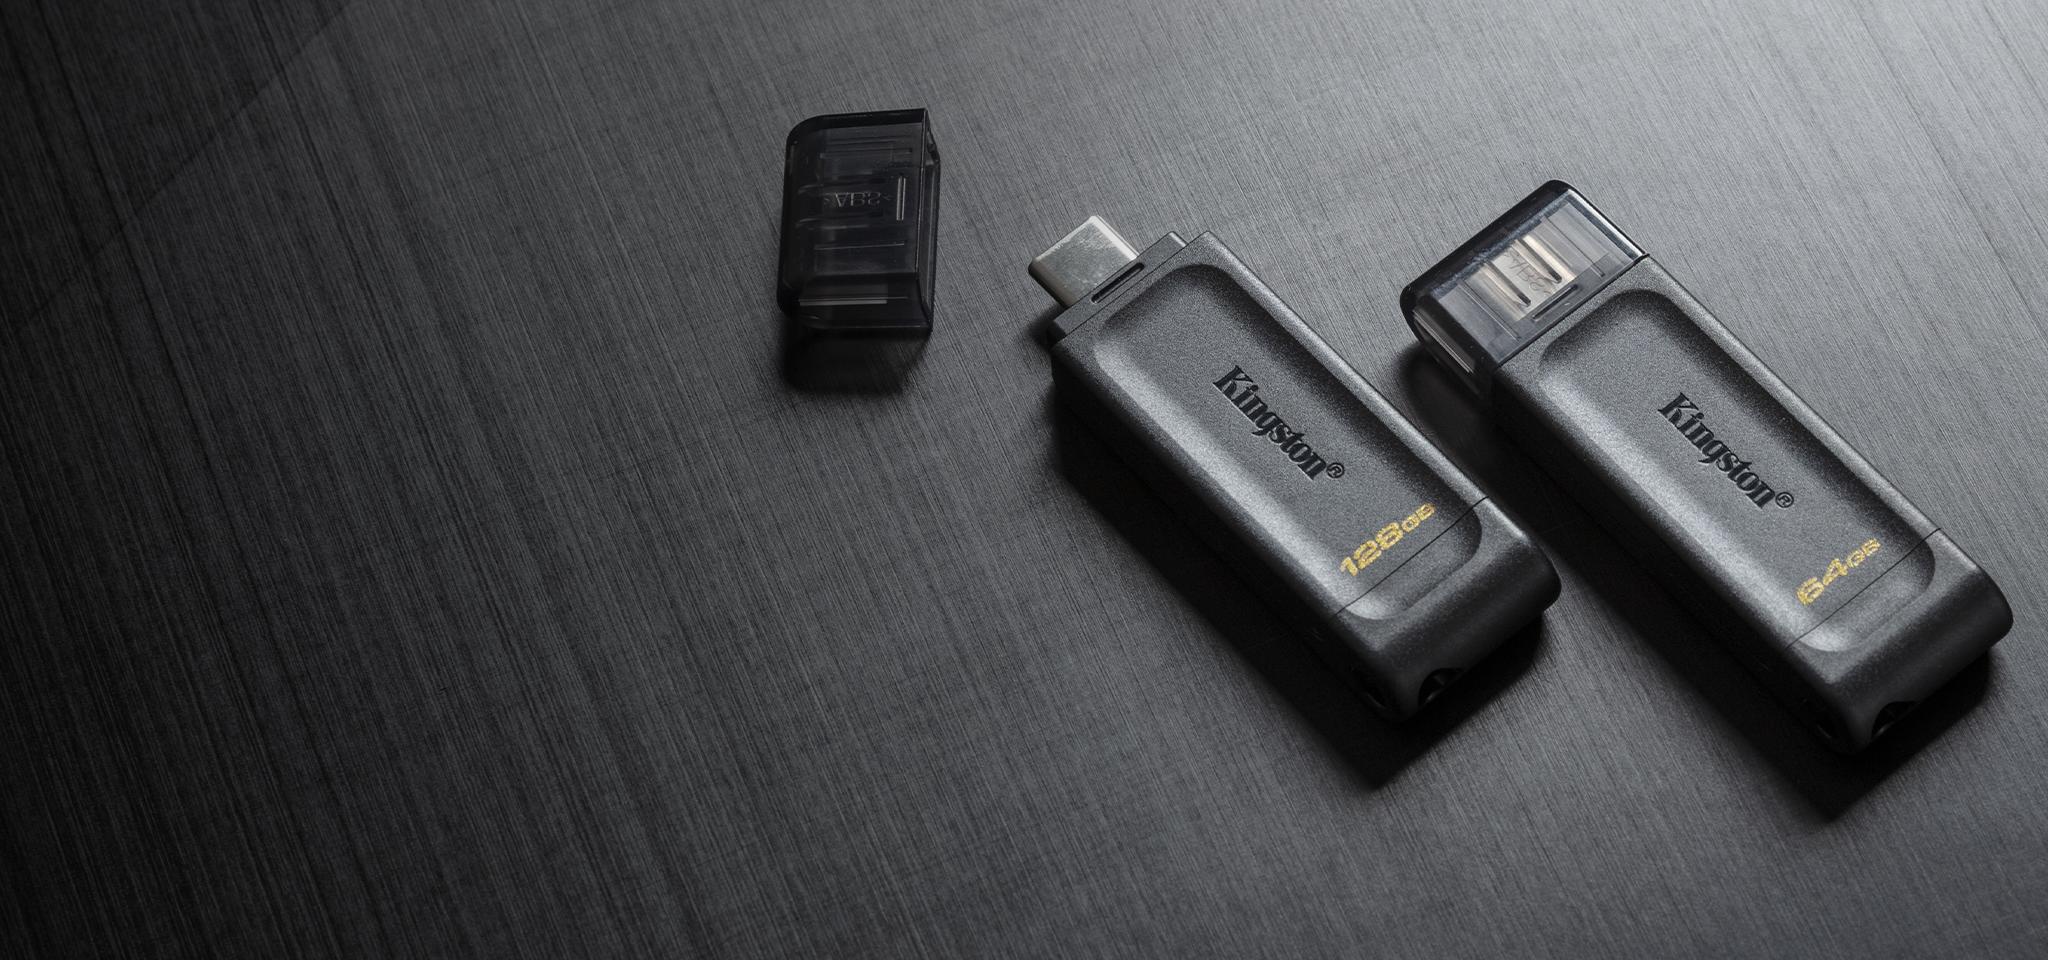 Sepasang flash disk USB DT70 diletakkan pada permukaan kain